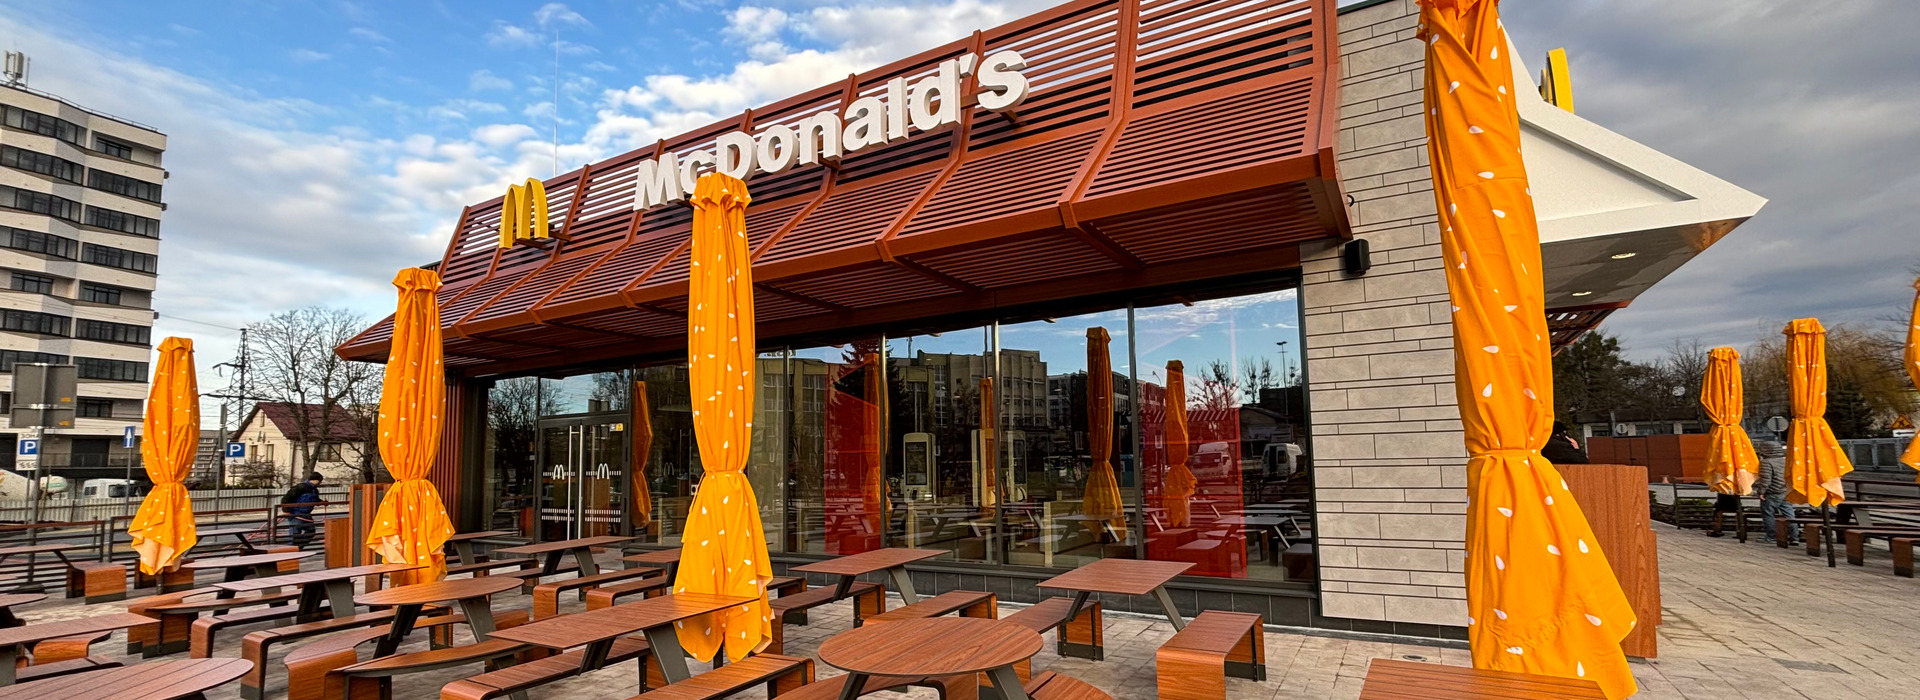 The Eighth McDonald’s Restaurant Opened in Lviv